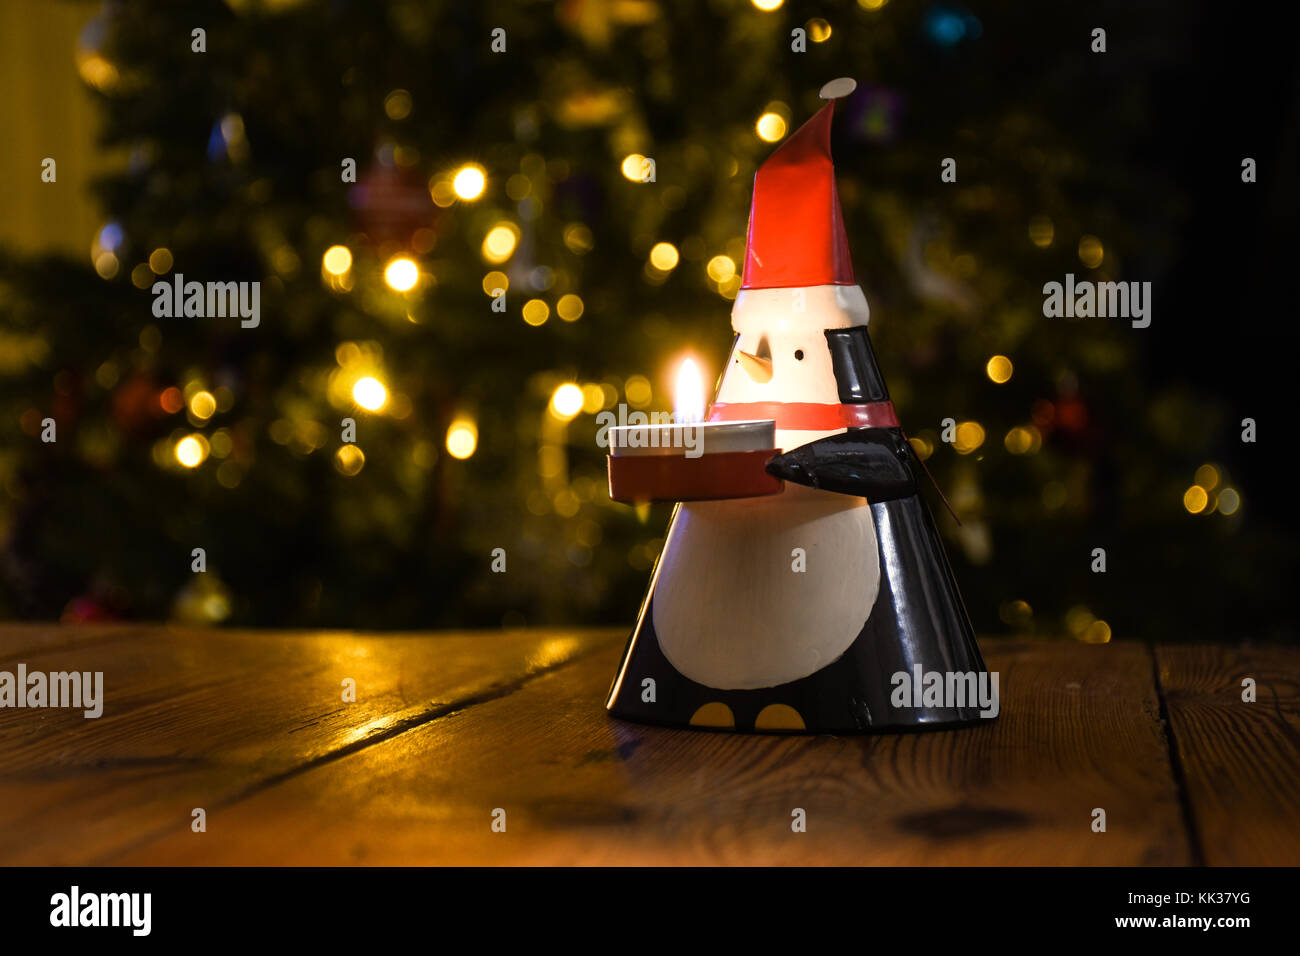 Pinguino di Natale e calda luce a lume di candela Foto Stock